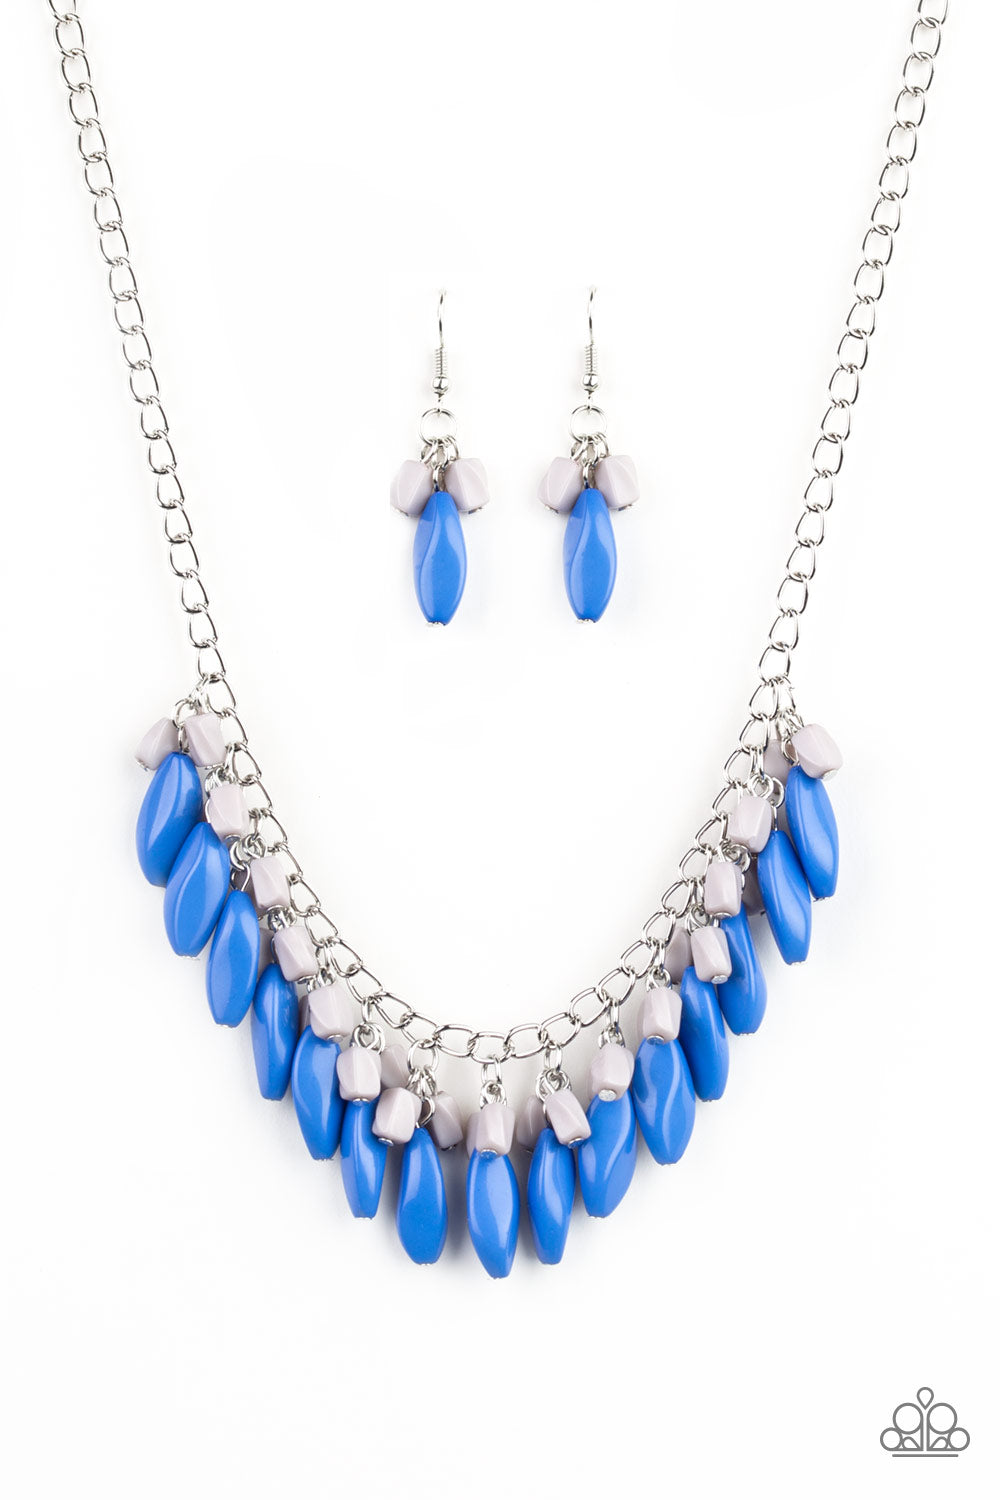 Paparazzi Accessories - Bead Binge - Blue & Gray Necklace